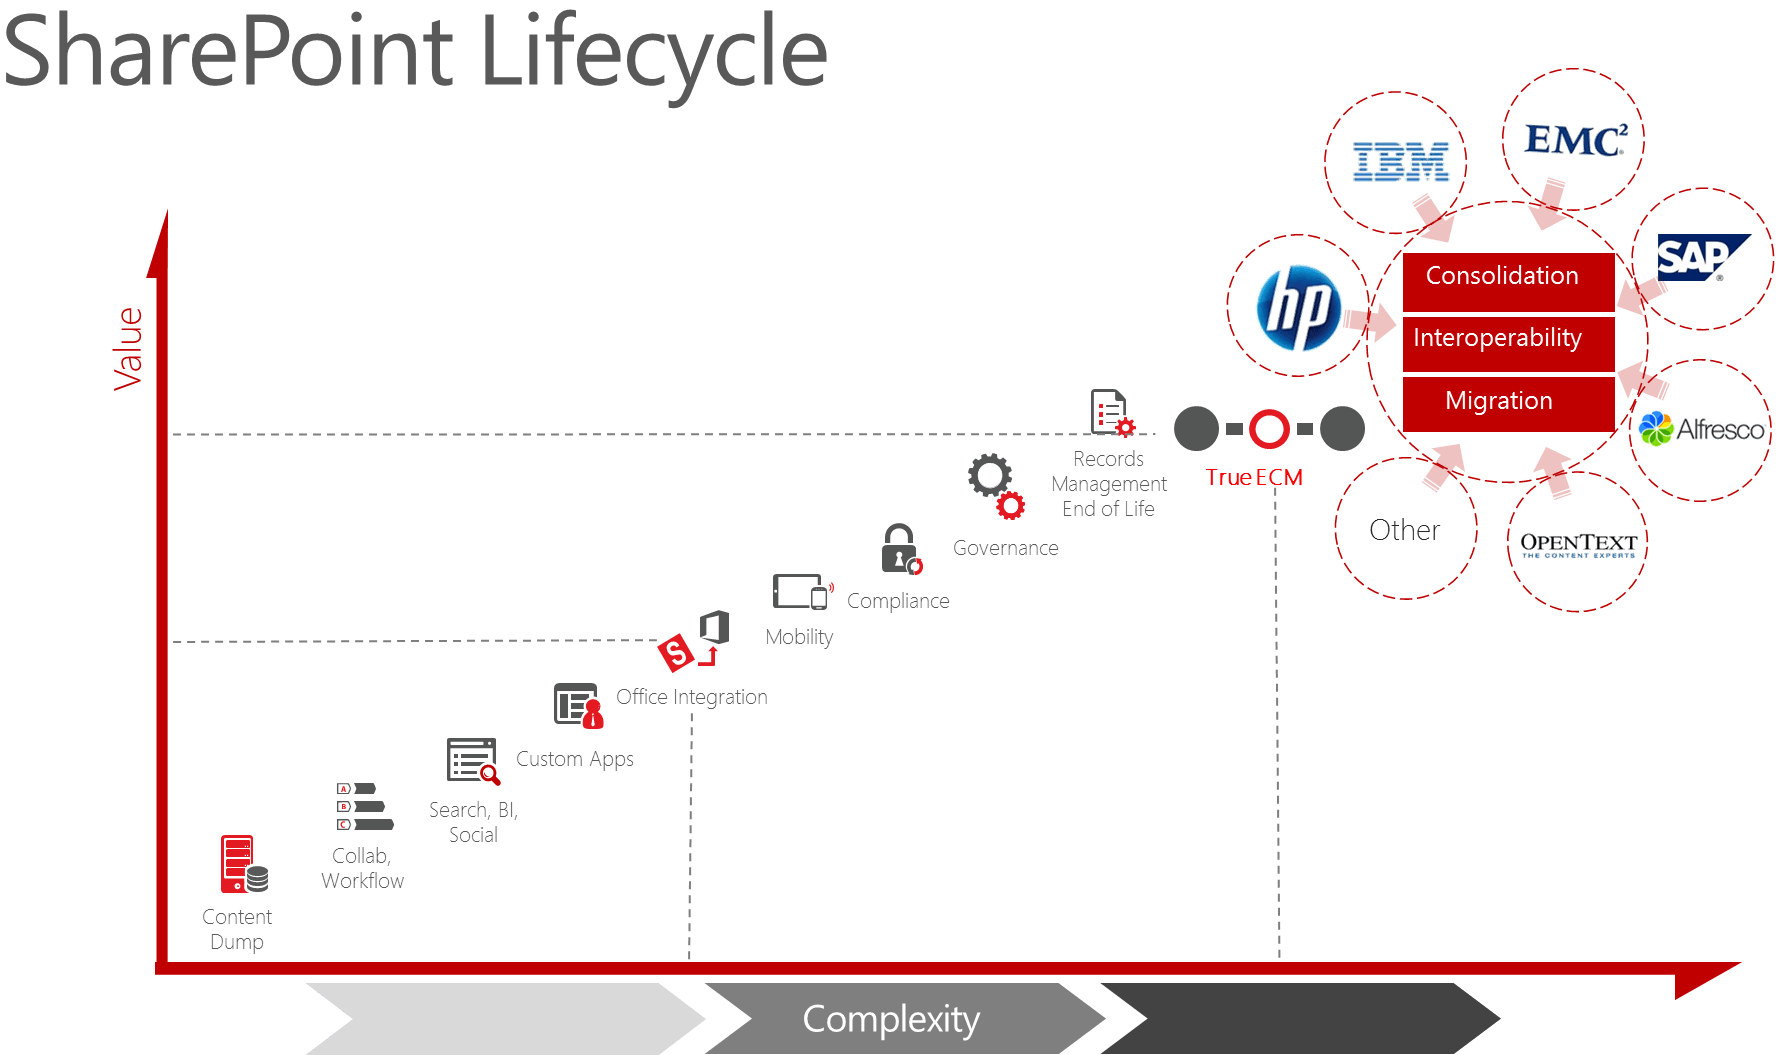 The SharePoint lifecycle, from content dump to true Enterprise Content Management (ECM).